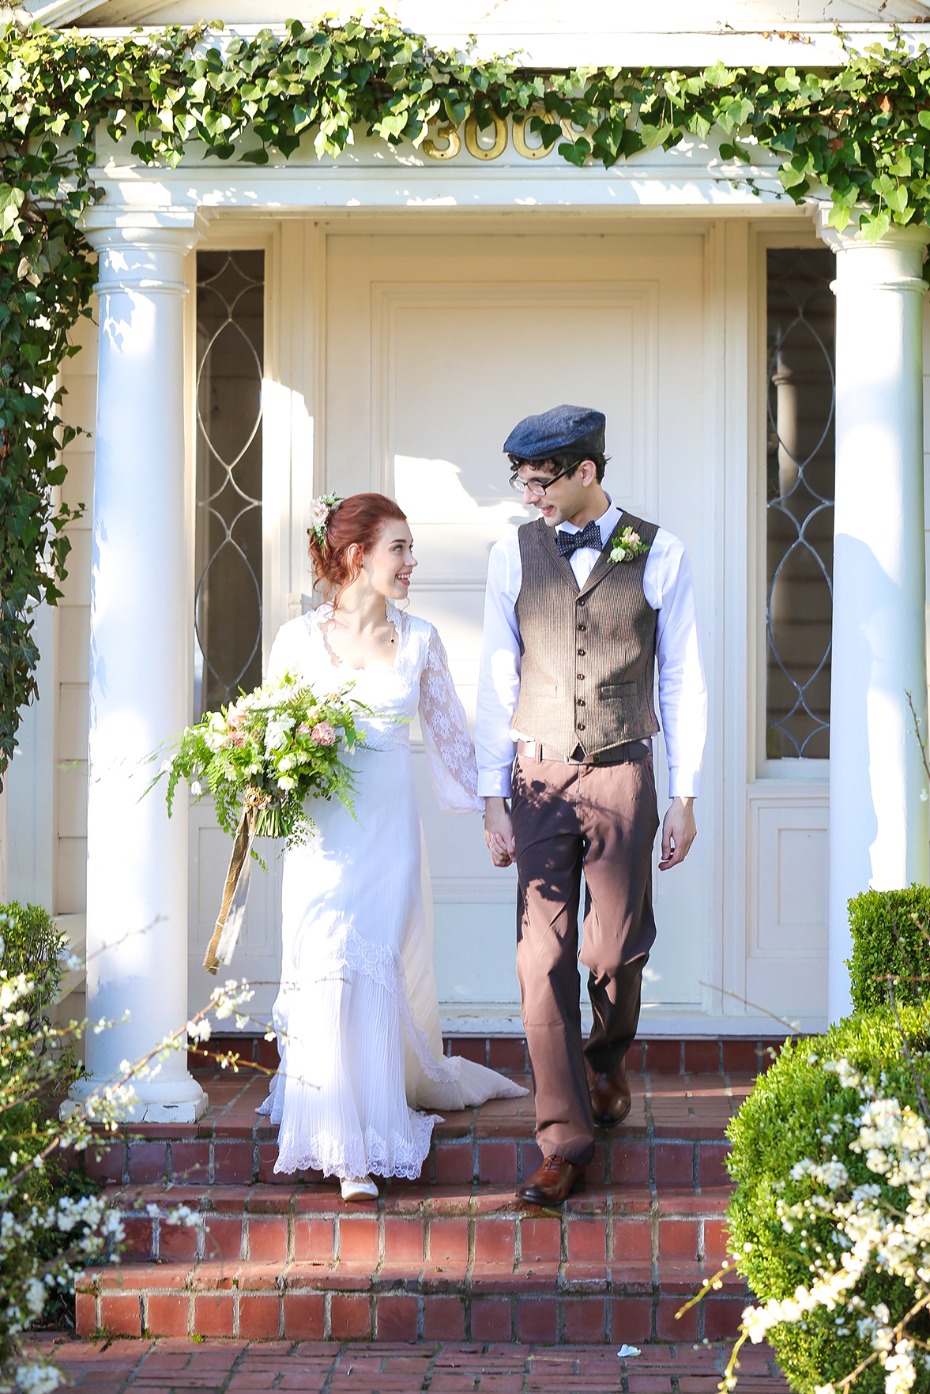 Anne of Green Gables wedding ideas from Portland